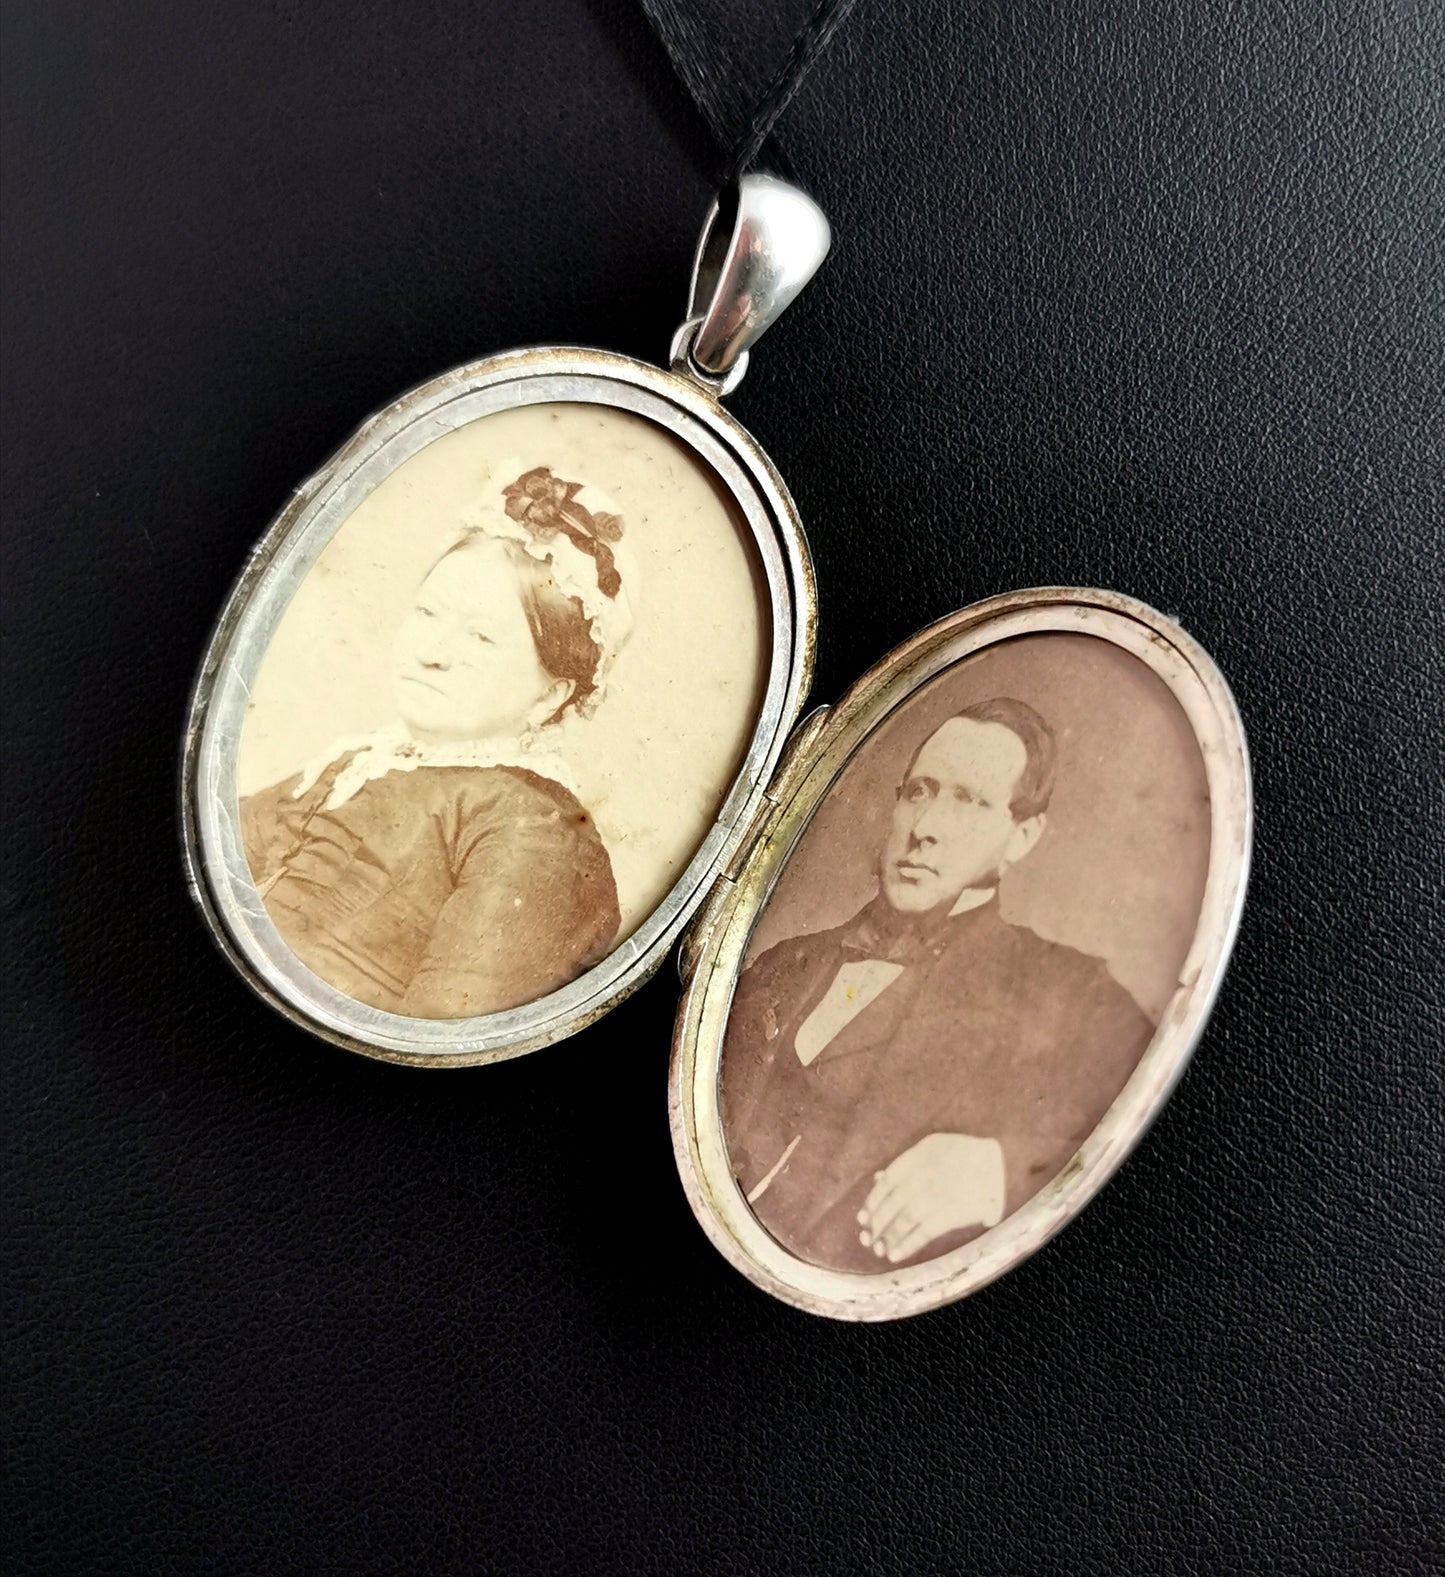 Antique Victorian silver locket pendant, aesthetic era, line engraved